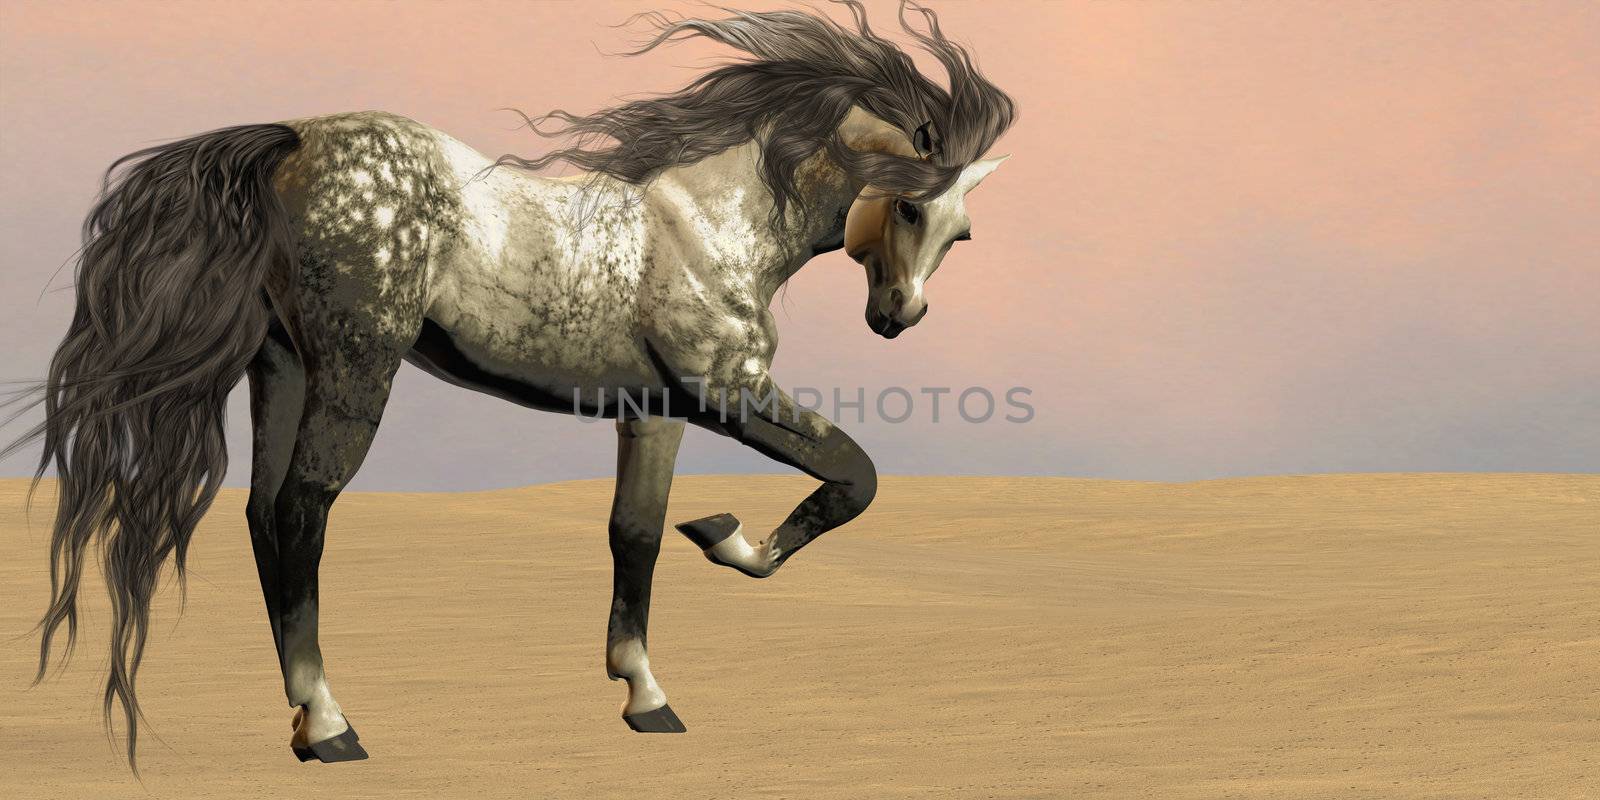 Desert Arabian Horse by Catmando